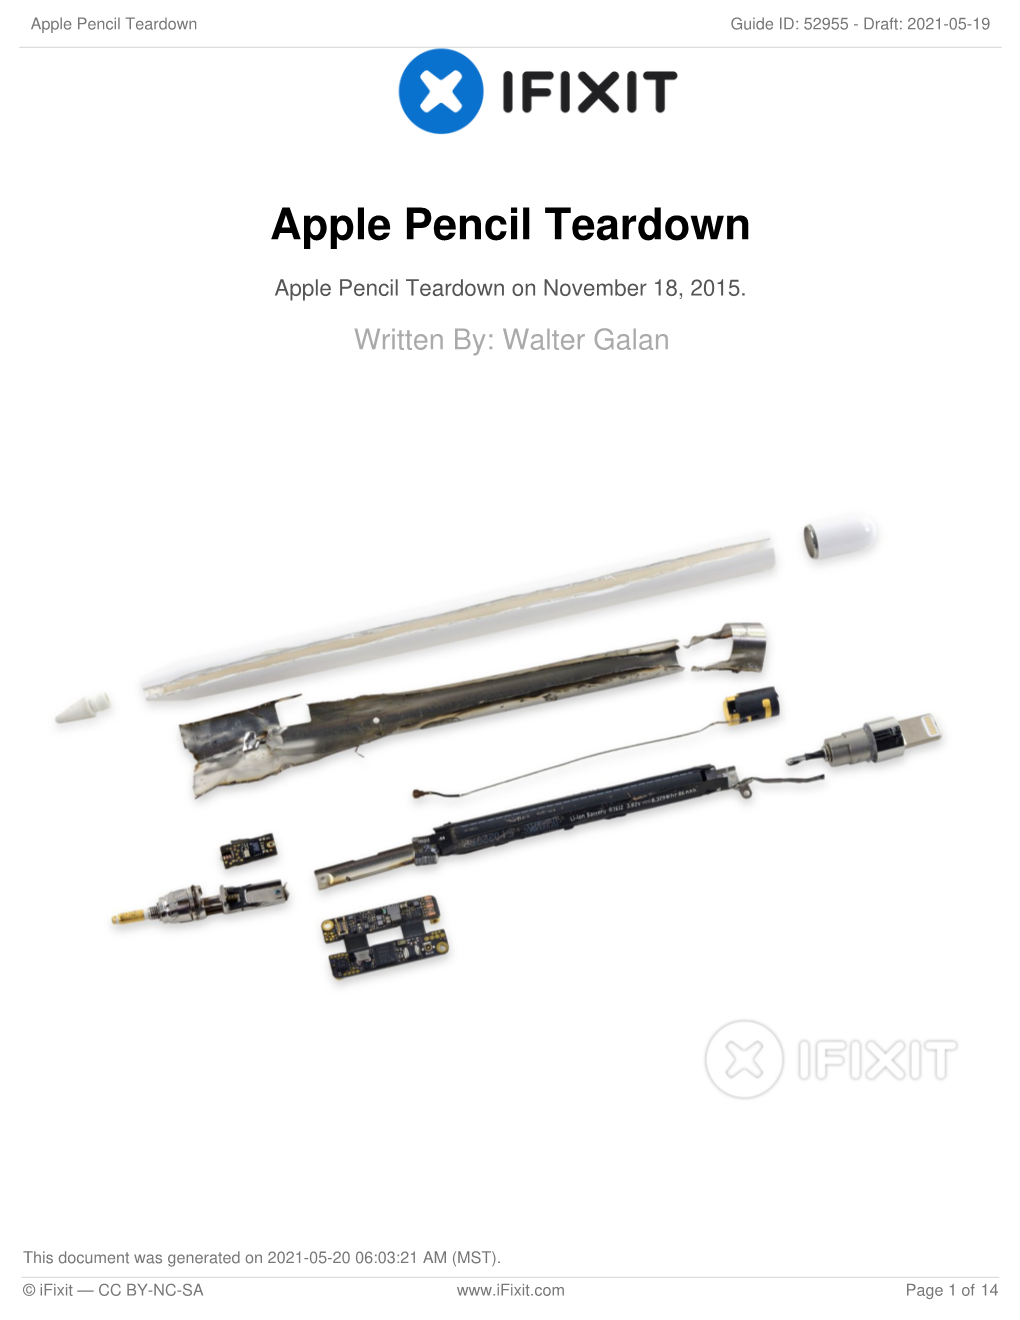 Apple Pencil Teardown Guide ID: 52955 - Draft: 2021-05-19